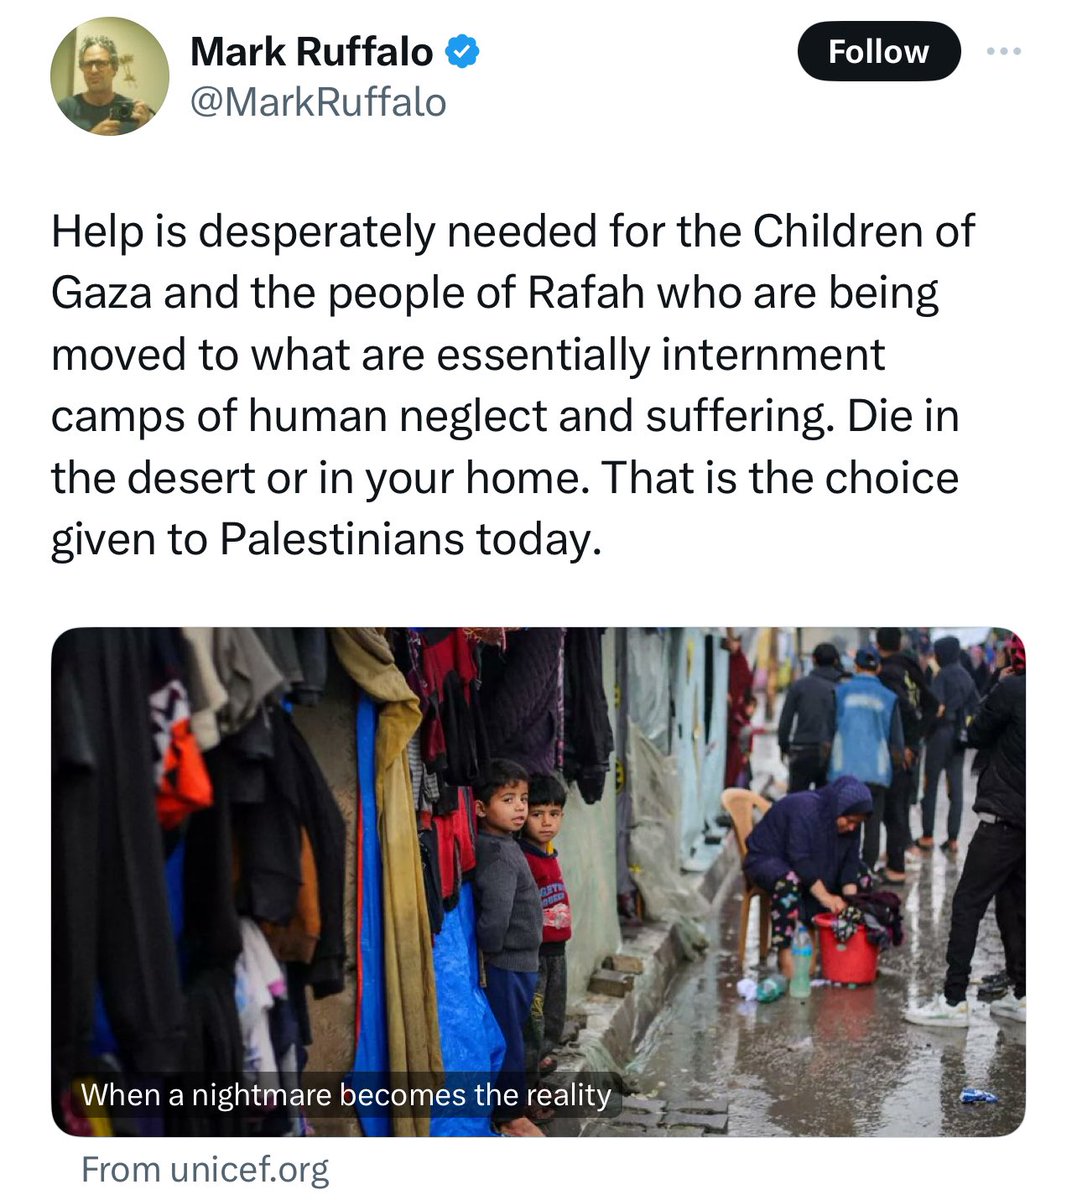 Mark Ruffalo แชร์คำพูดของตัวแทน Unicef เกี่ยวกับสถานการณ์ที่ Rafah และมาร์คบอกว่า “ความช่วยเหลือเป็นที่ต้องการอย่างมากที่สุดสำหรับเด็กๆที่ฉนวนกาซ่าและประชาชนที่ราฟาห์ ผู้ที่กำลังถูกส่งไปที่ๆเรียกได้ว่าเป็นค่ายกักขังแห่งการทอดทิ้งมนุษย์และความทุกข์ทรมาน…